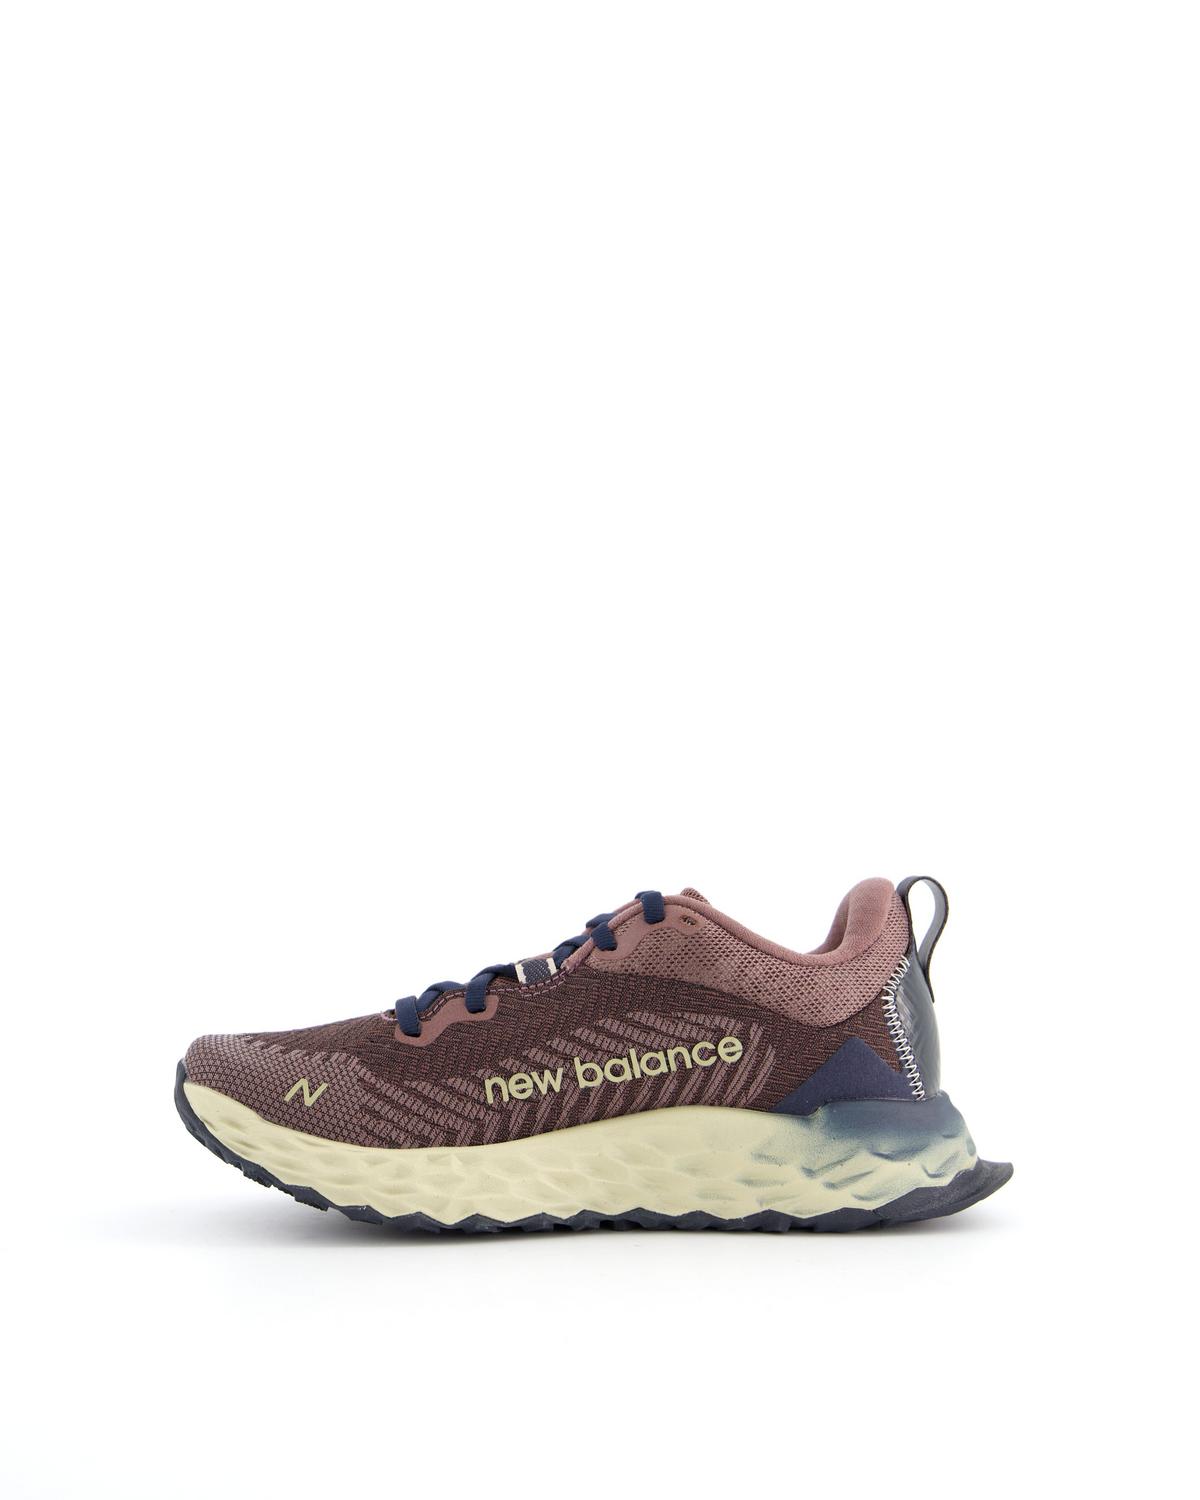 New Balance Women’s Hierro V6 Trail Running Shoes -  Brown